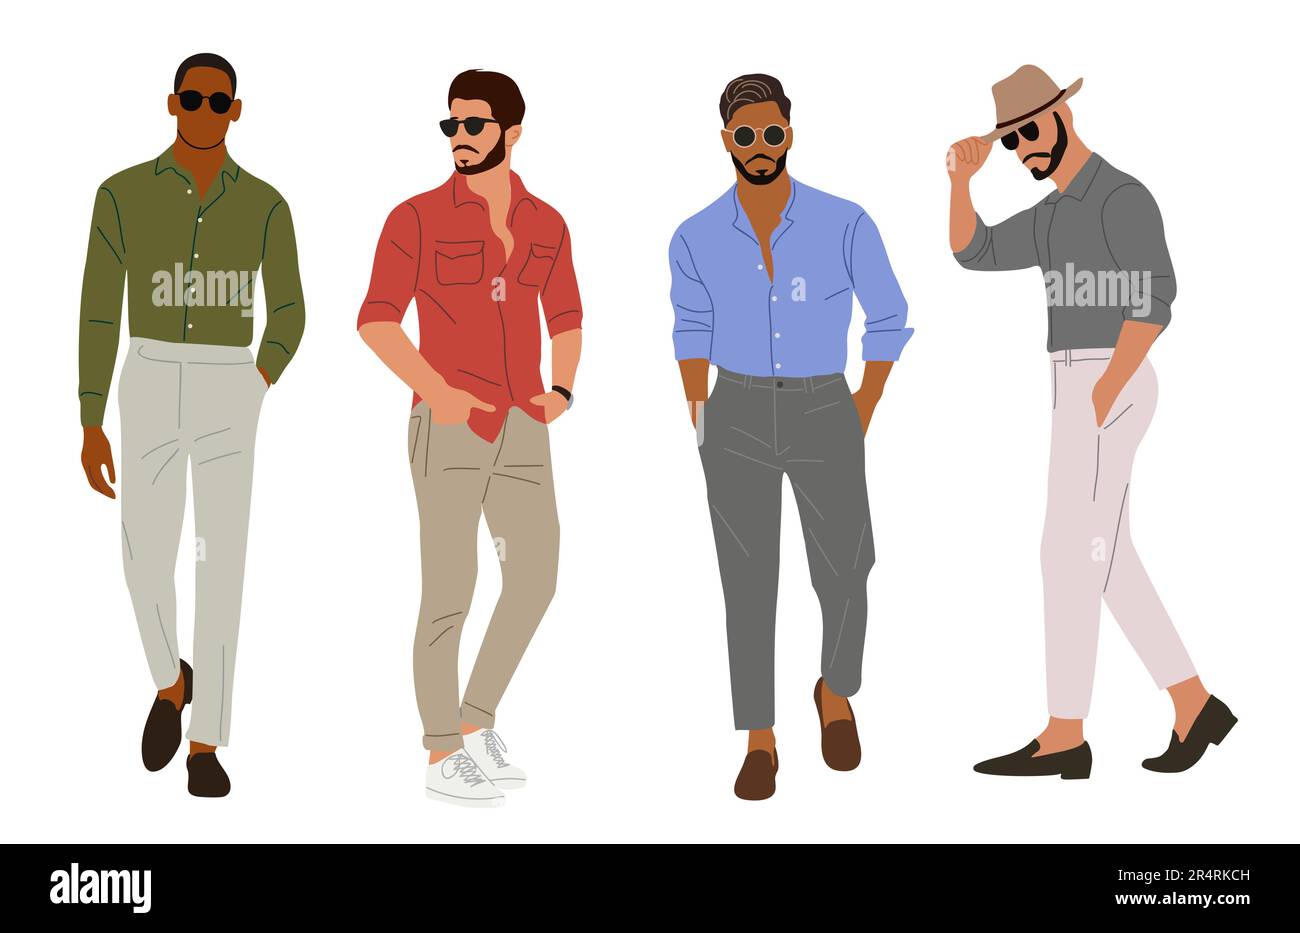 https://c8.alamy.com/comp/2R4RKCH/set-of-stylish-young-men-wearing-street-fashion-2R4RKCH.jpg